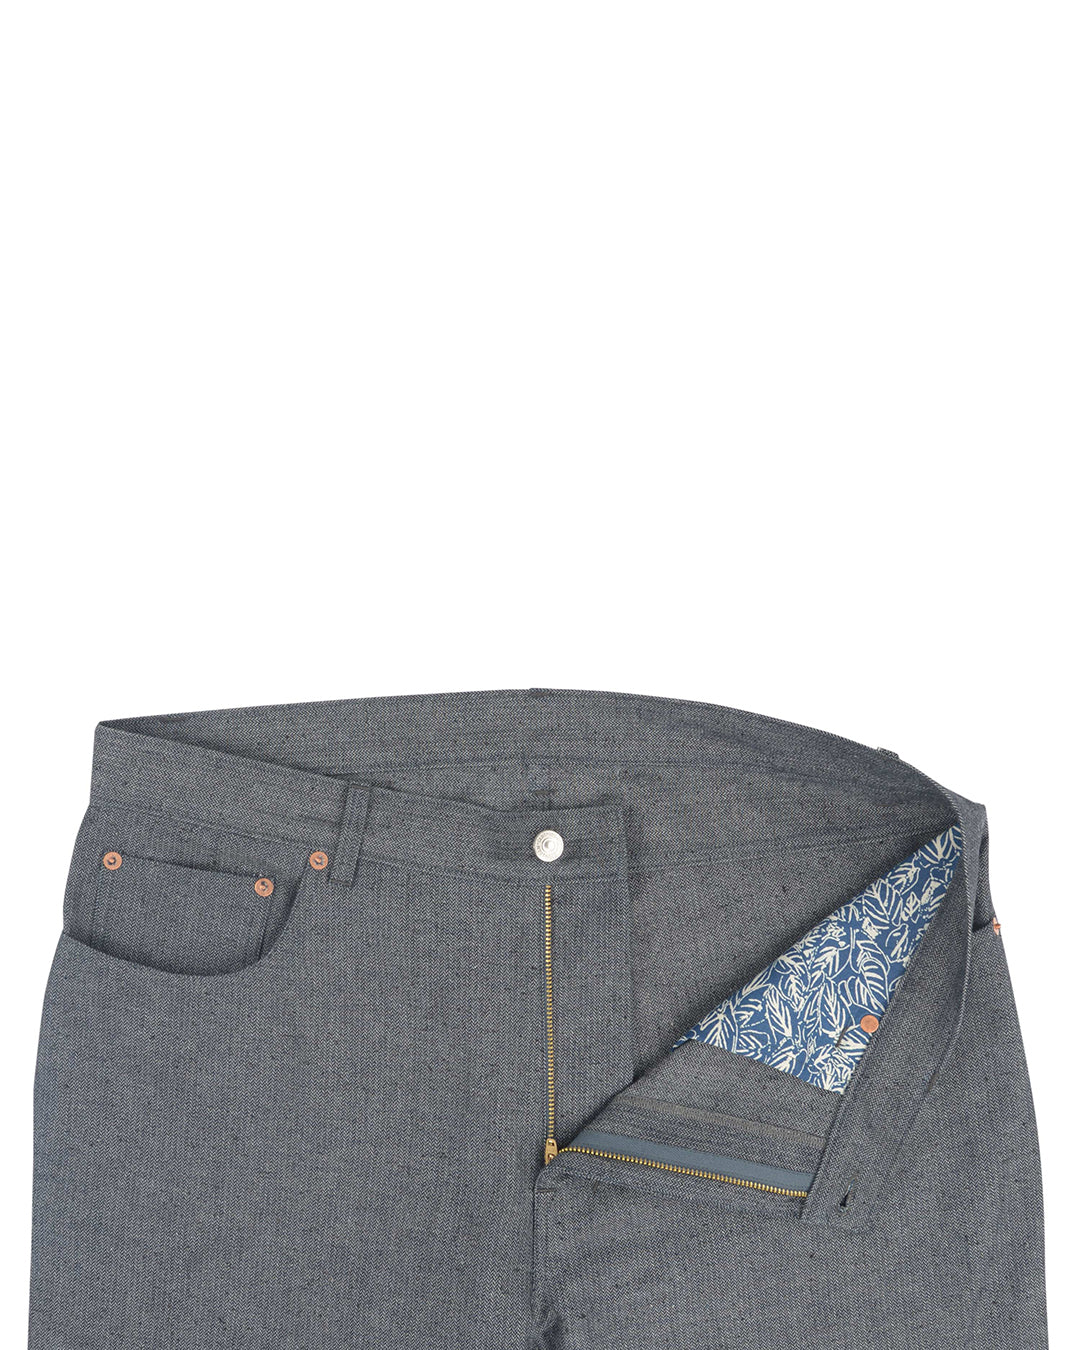 Denim: Navy Grey Slub Herringbone Jeans